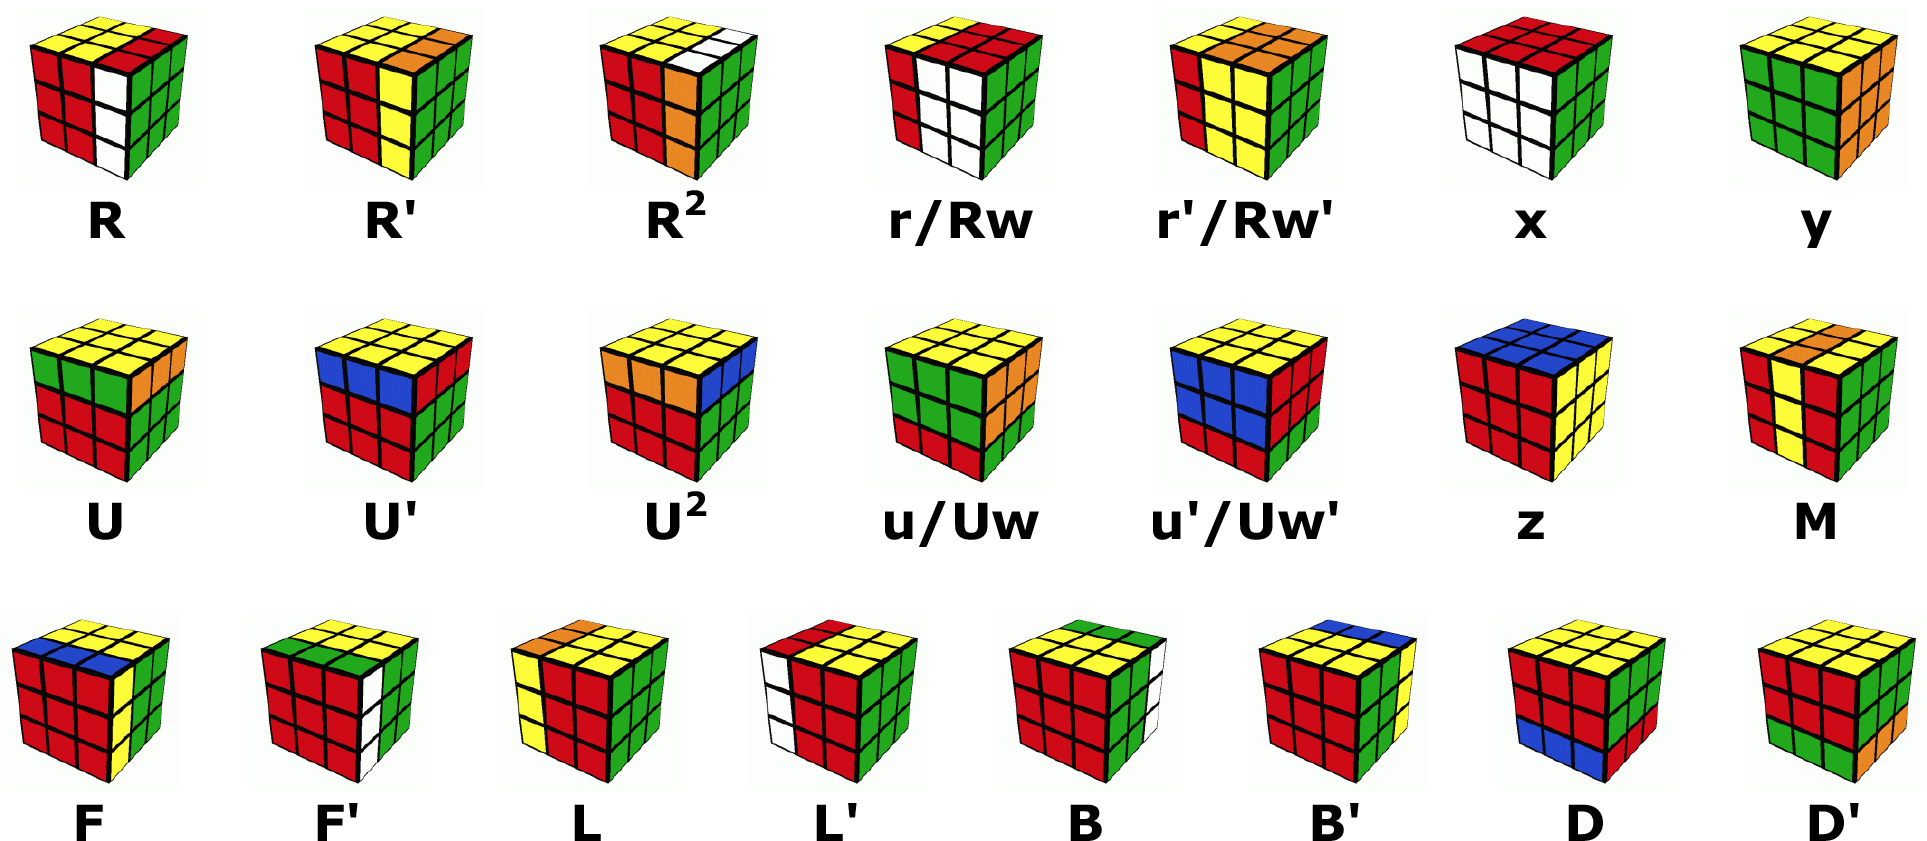 M2M Day 69: Decoding Rubik's Cube algorithms | by Max Deutsch | Medium